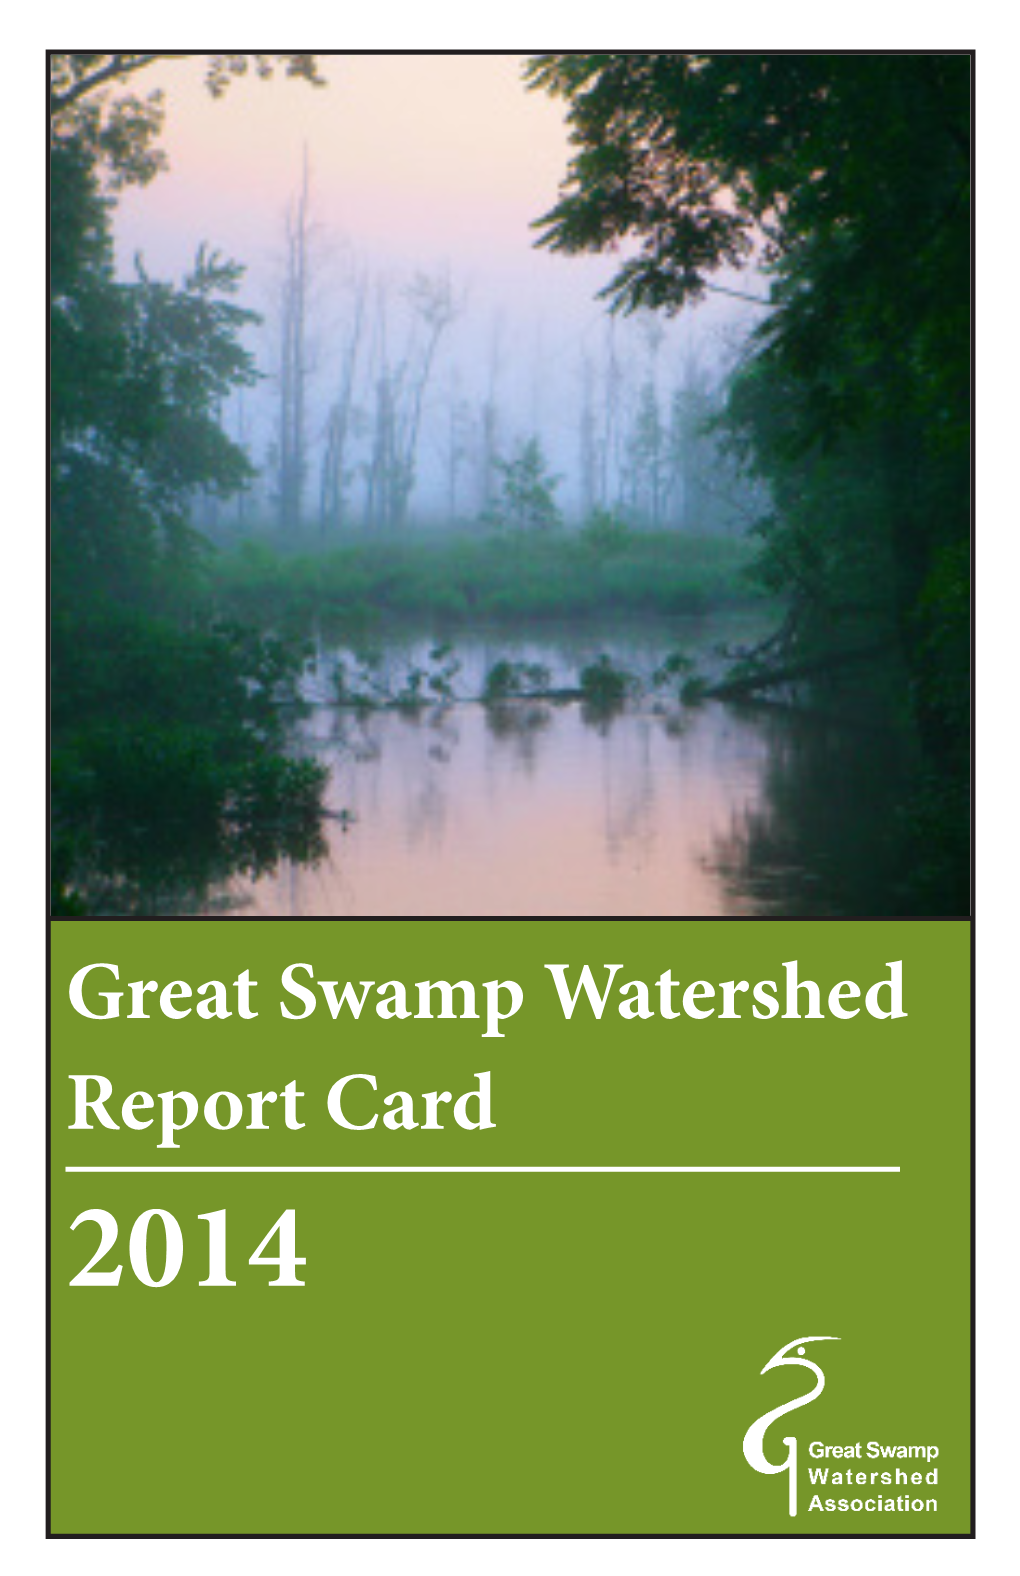 2014 Report Card